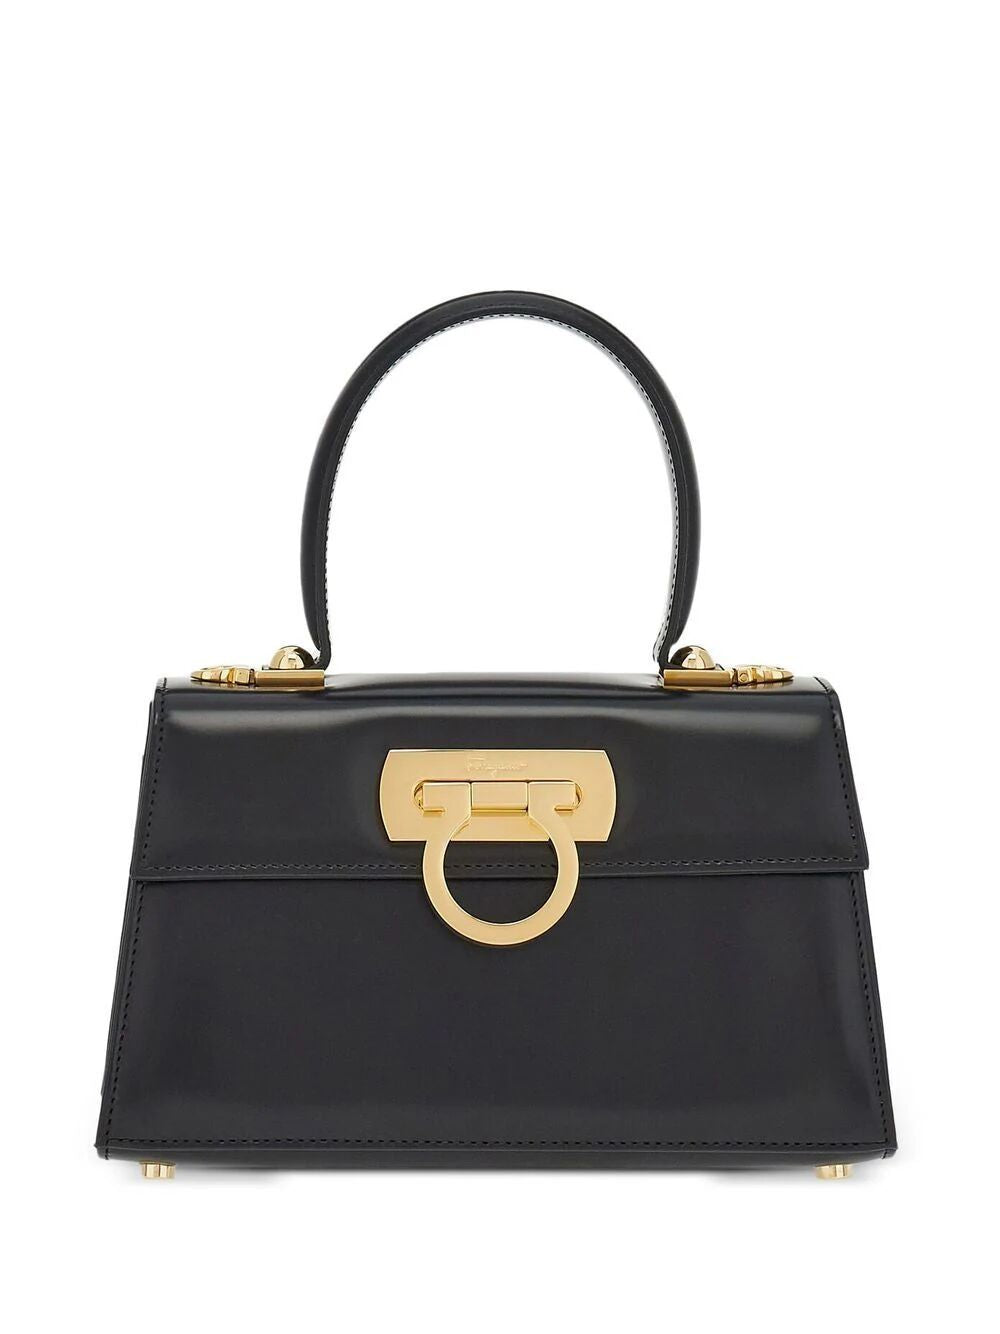 FERRAGAMO Iconic Black Calf Leather Top Handle Handbag for Women